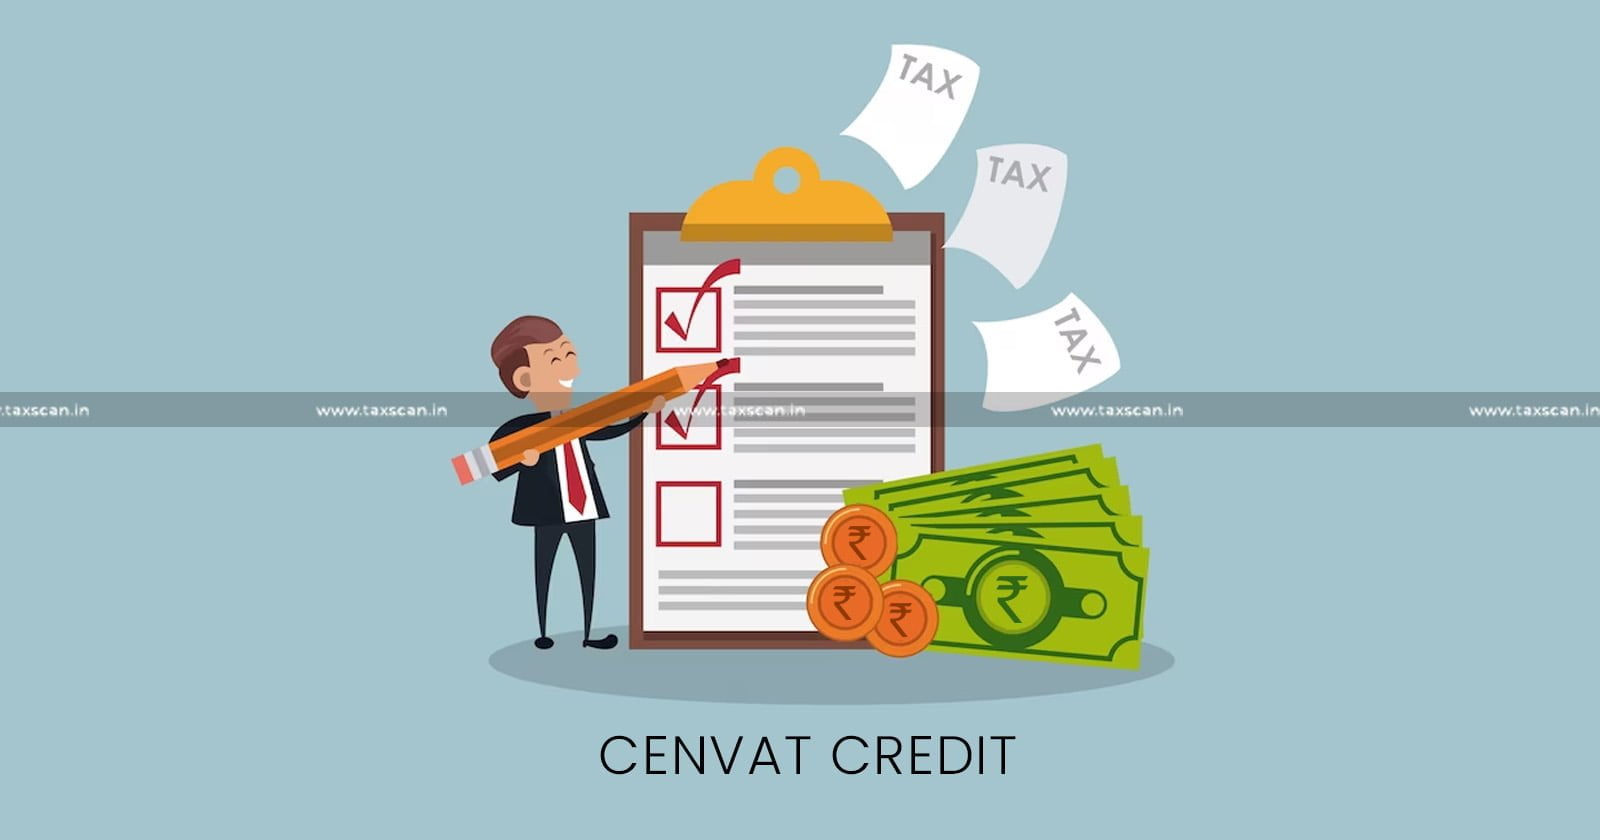 CESTAT - Refund - CENVAT Credit - Service Tax - Secondary Evidence - Refund of CENVAT Credit - Refund of CENVAT Credit of Service Tax - a taxscan